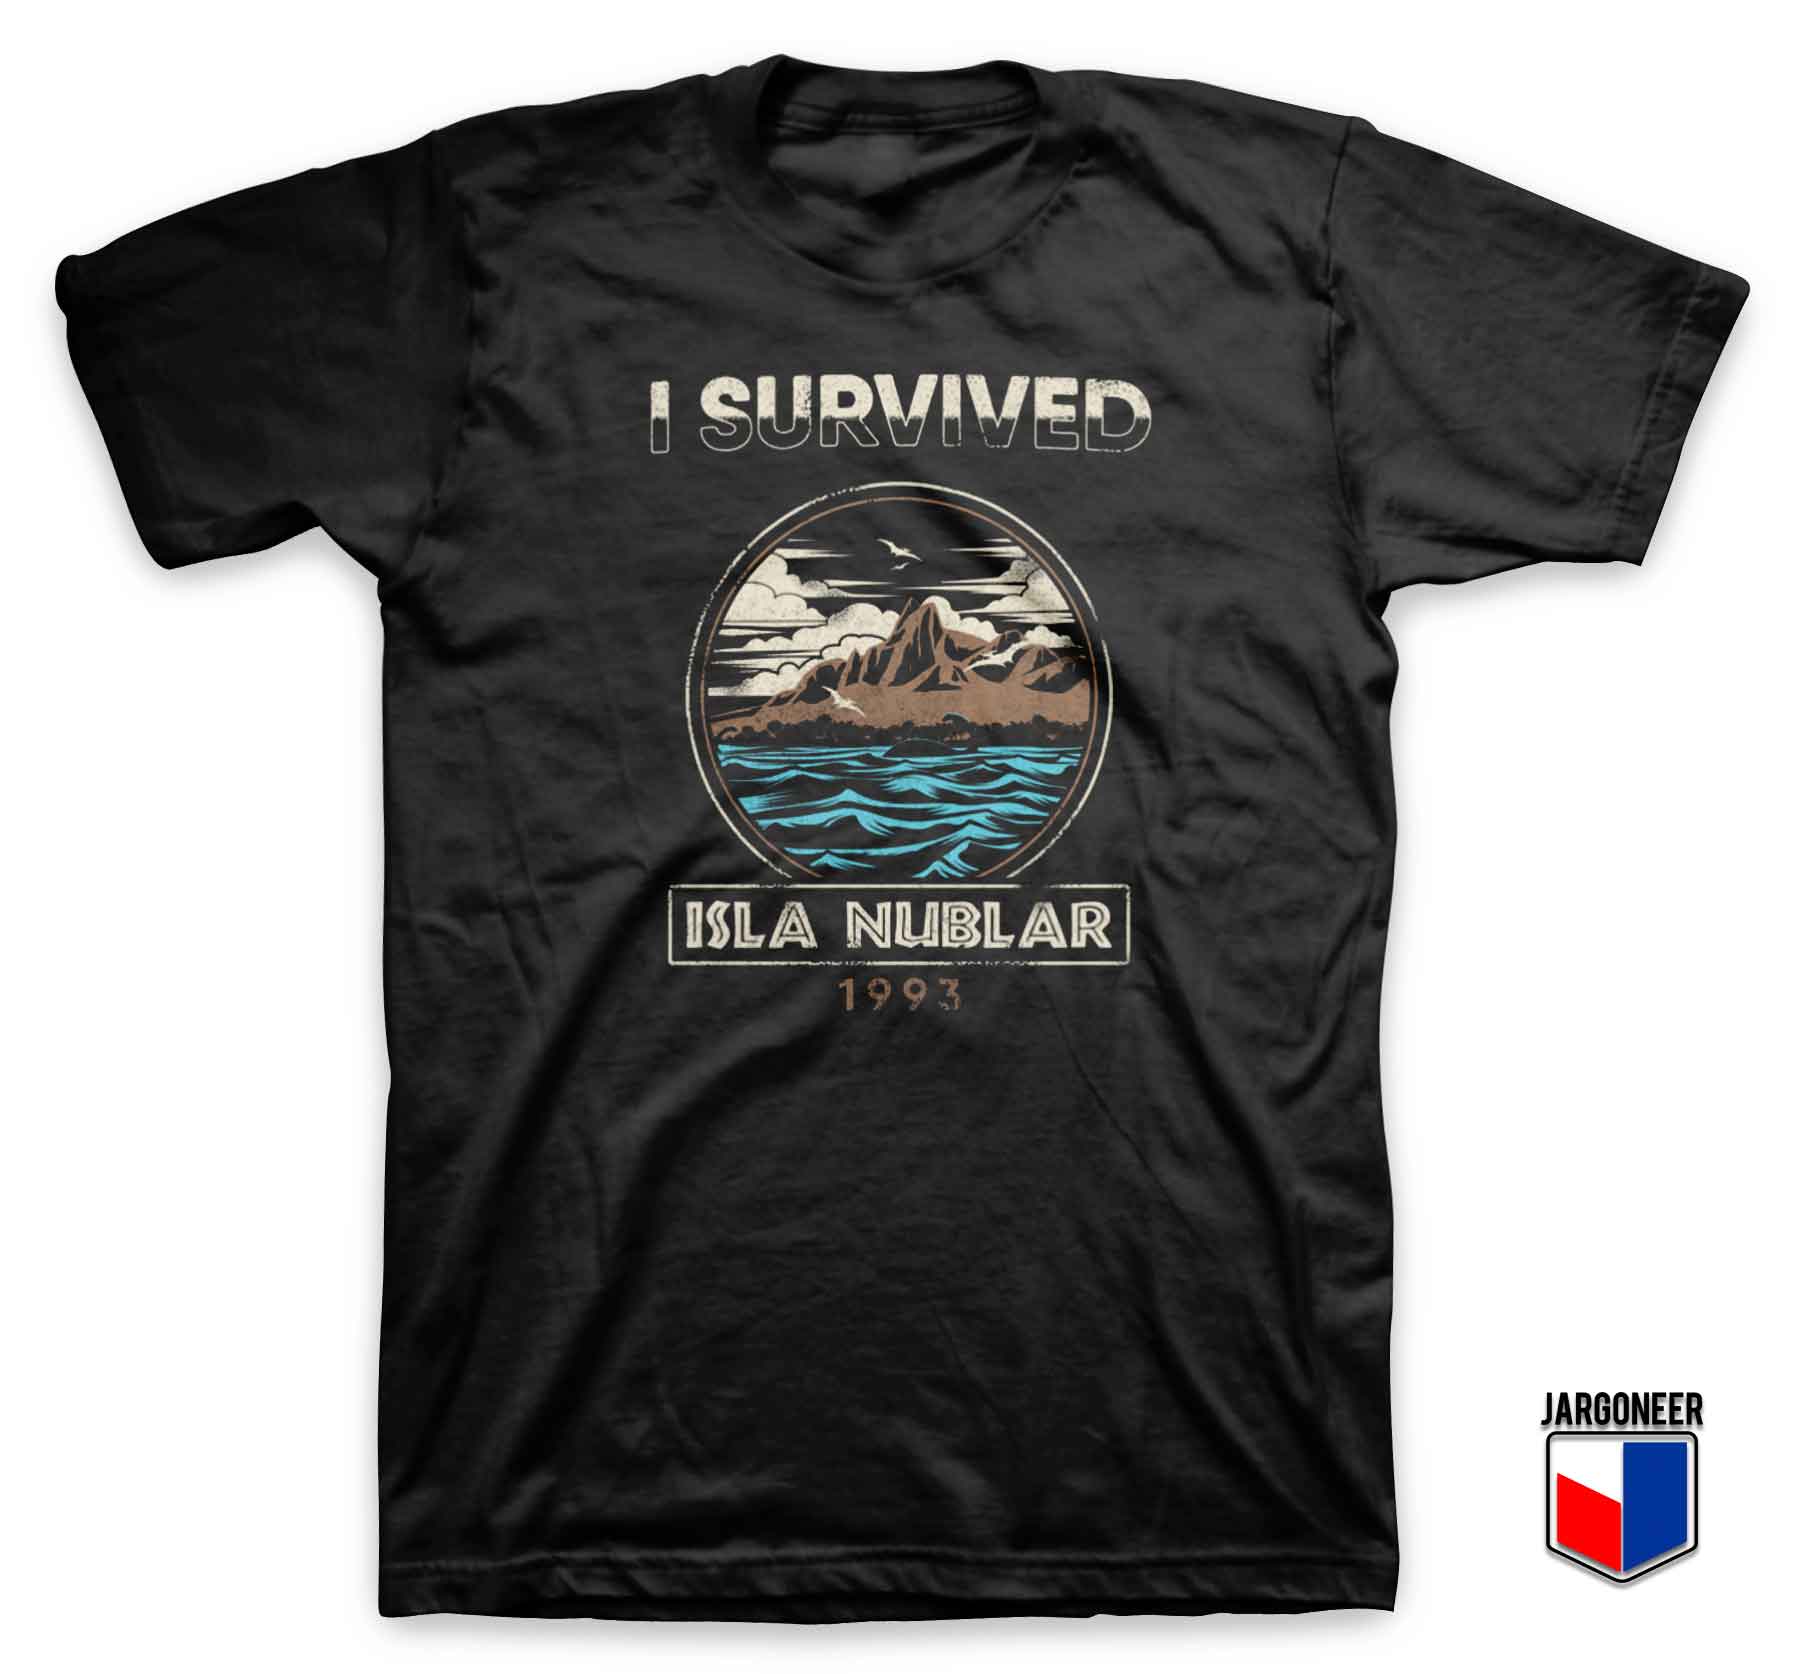 Isla Nubular 1993 - Shop Unique Graphic Cool Shirt Designs